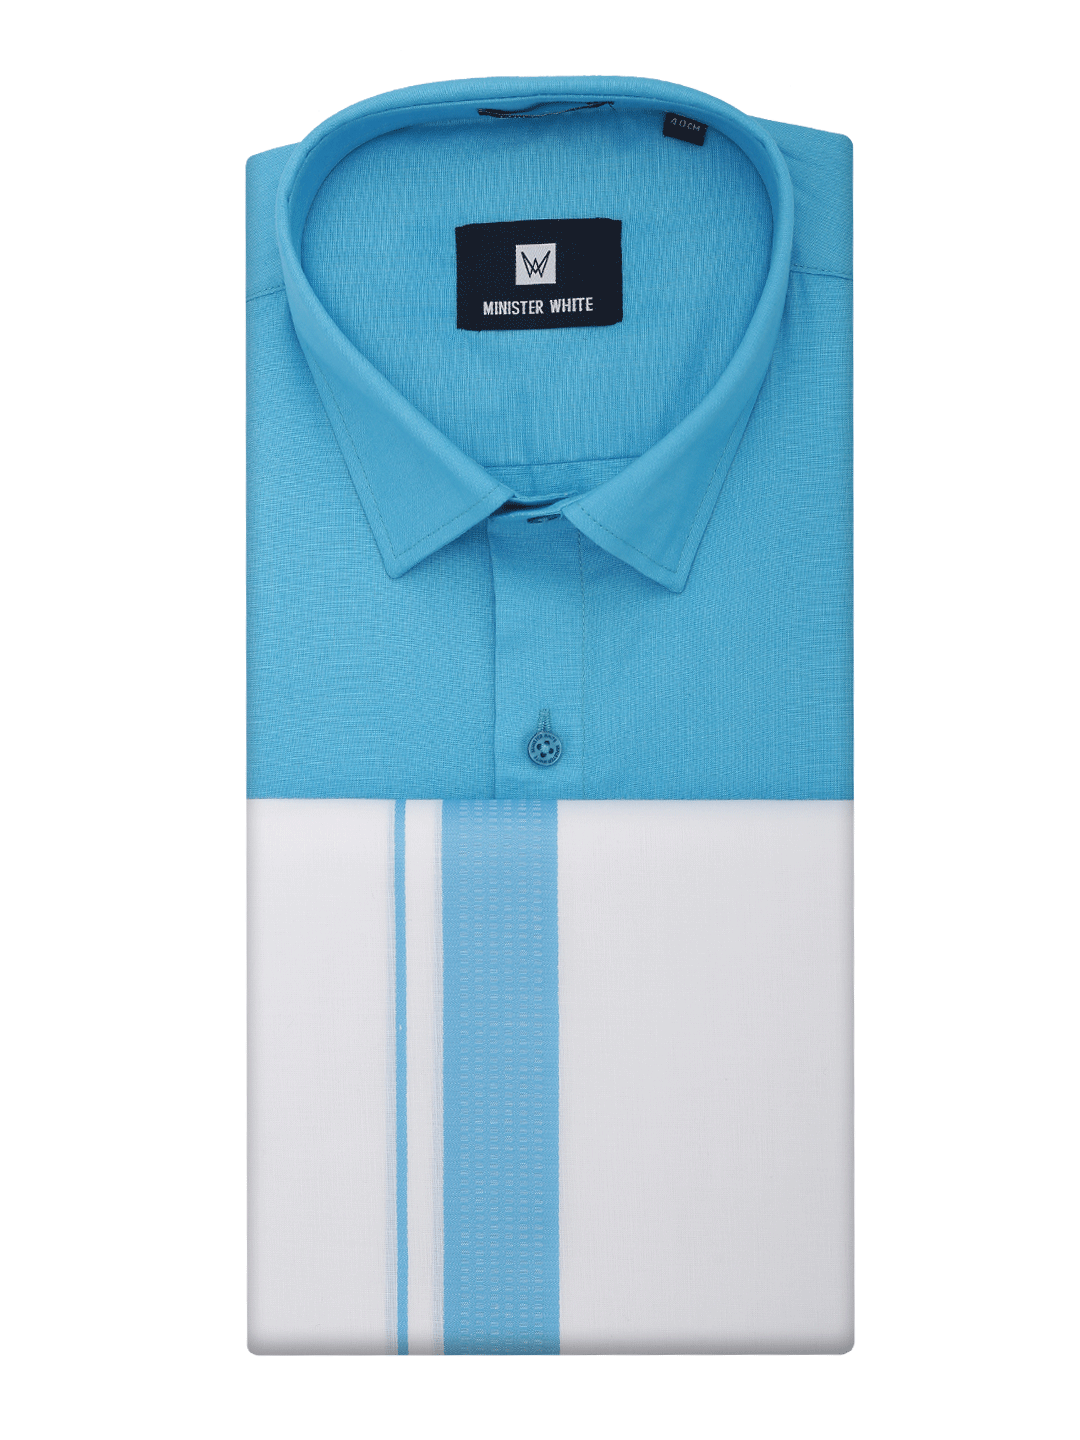 Mens Sky Blue Color Shirt with Matching Border Dhoti Combo Casper_03